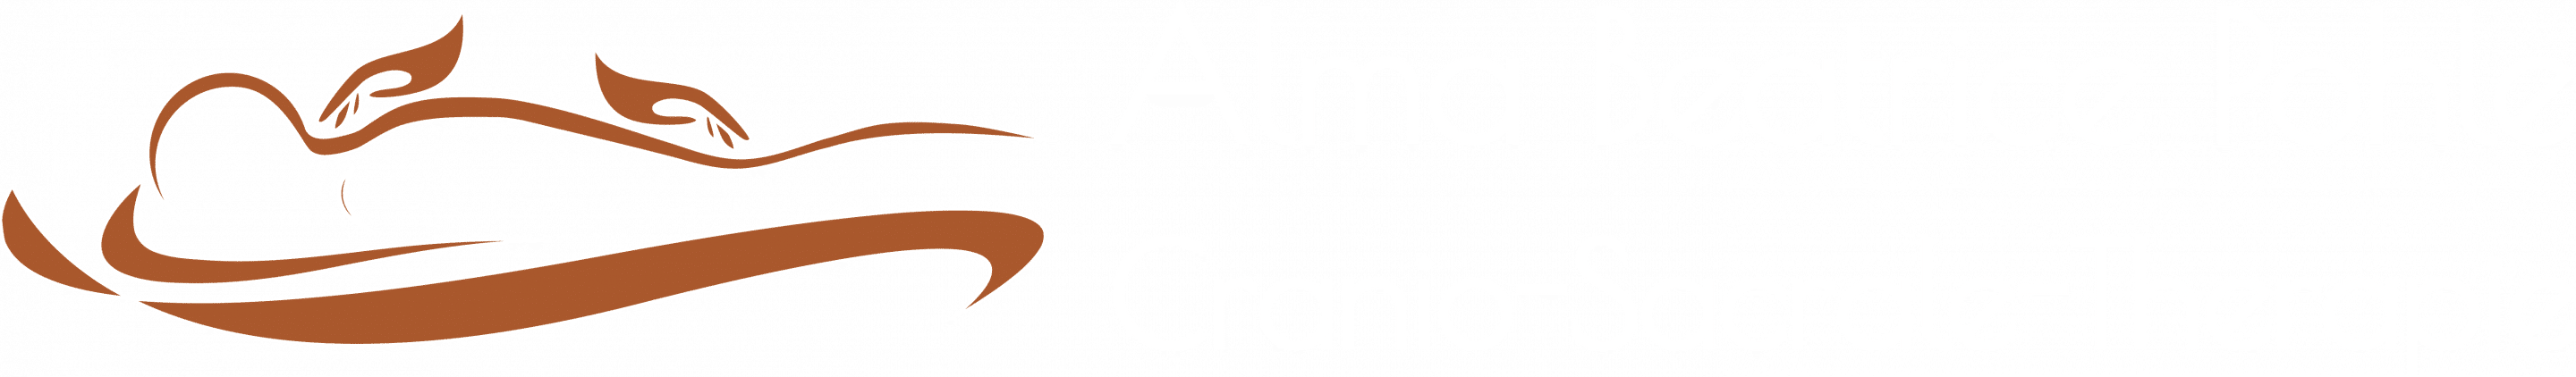 Alma Beatrice Pohle / Cranio-Sacrale-Therapie